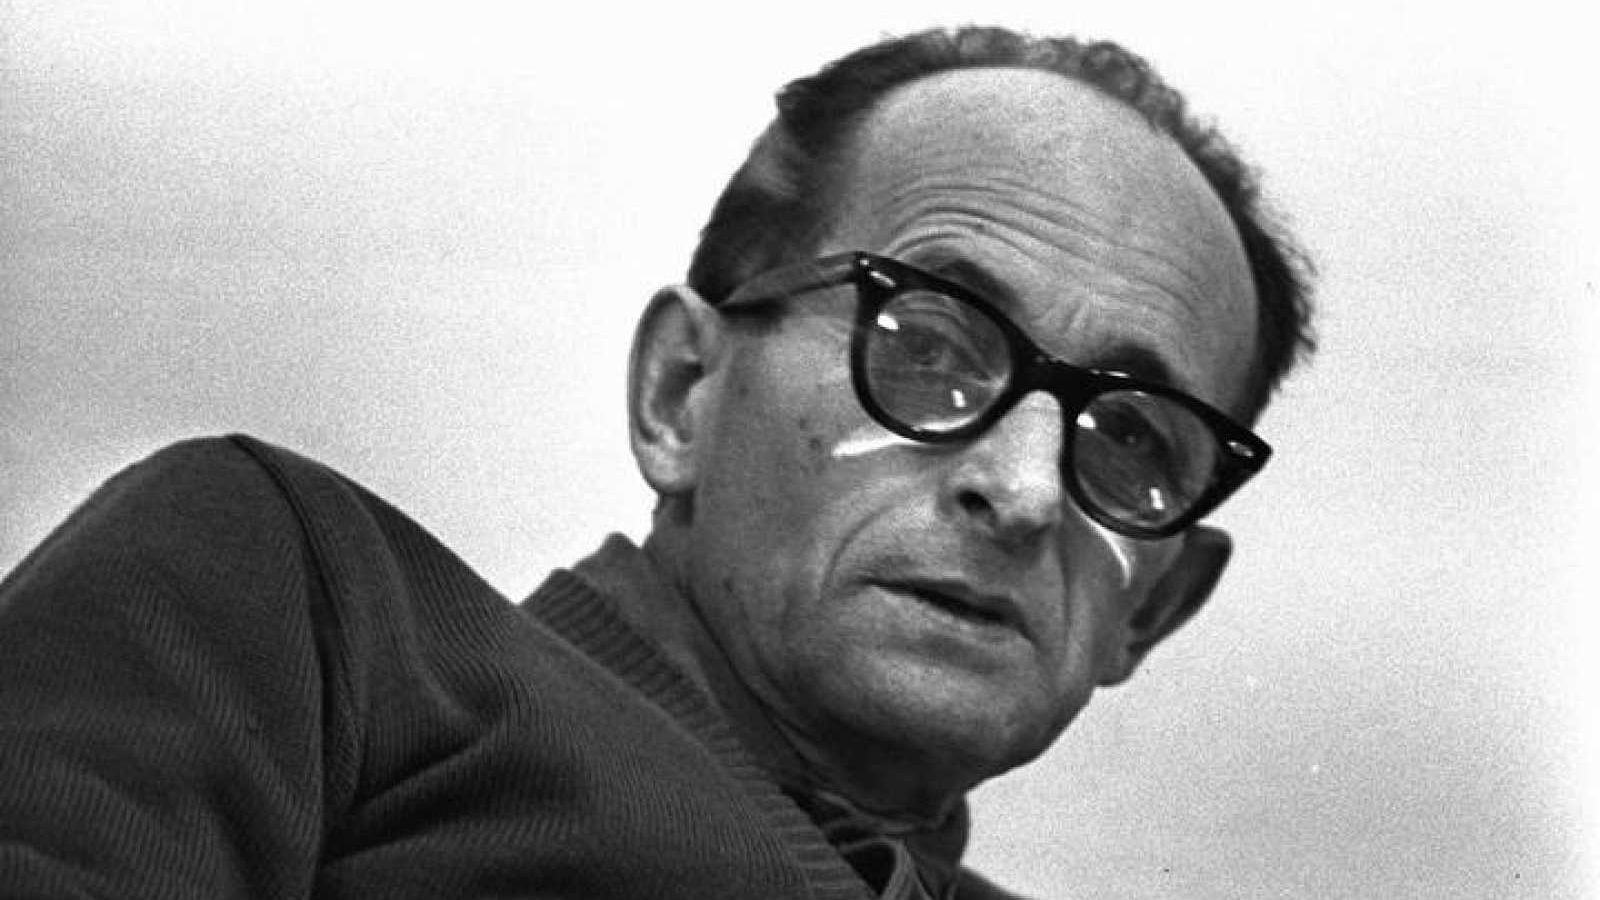 Las últimas palabras de Adolf Eichmann fueron: “¡Viva Alemania! ¡Viva Argentina! ¡Viva Austria!”. 